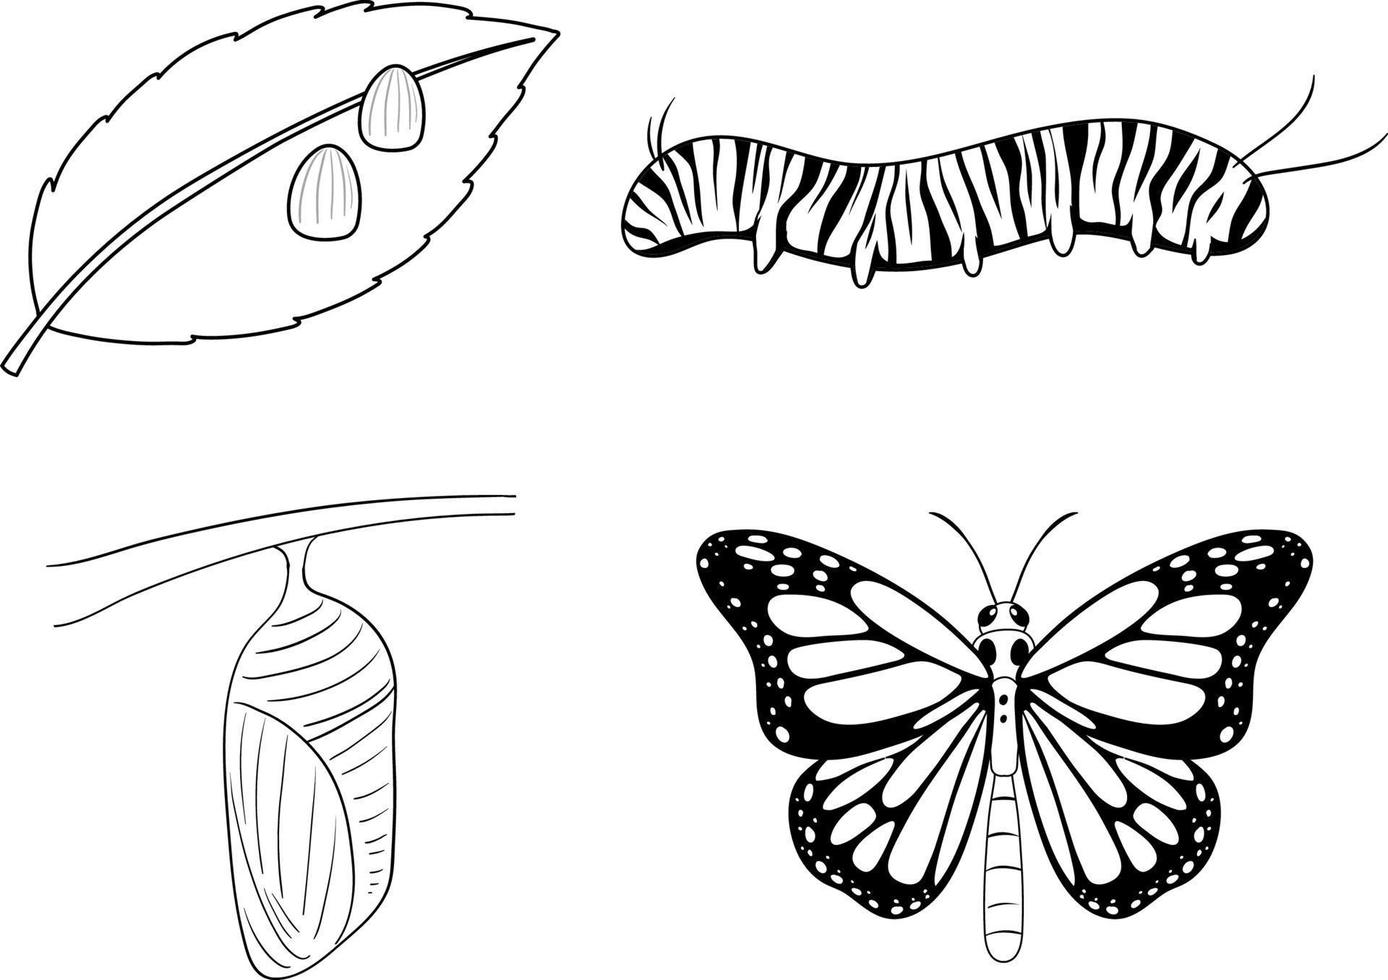 ciclo de vida do doodle da borboleta monarca vetor